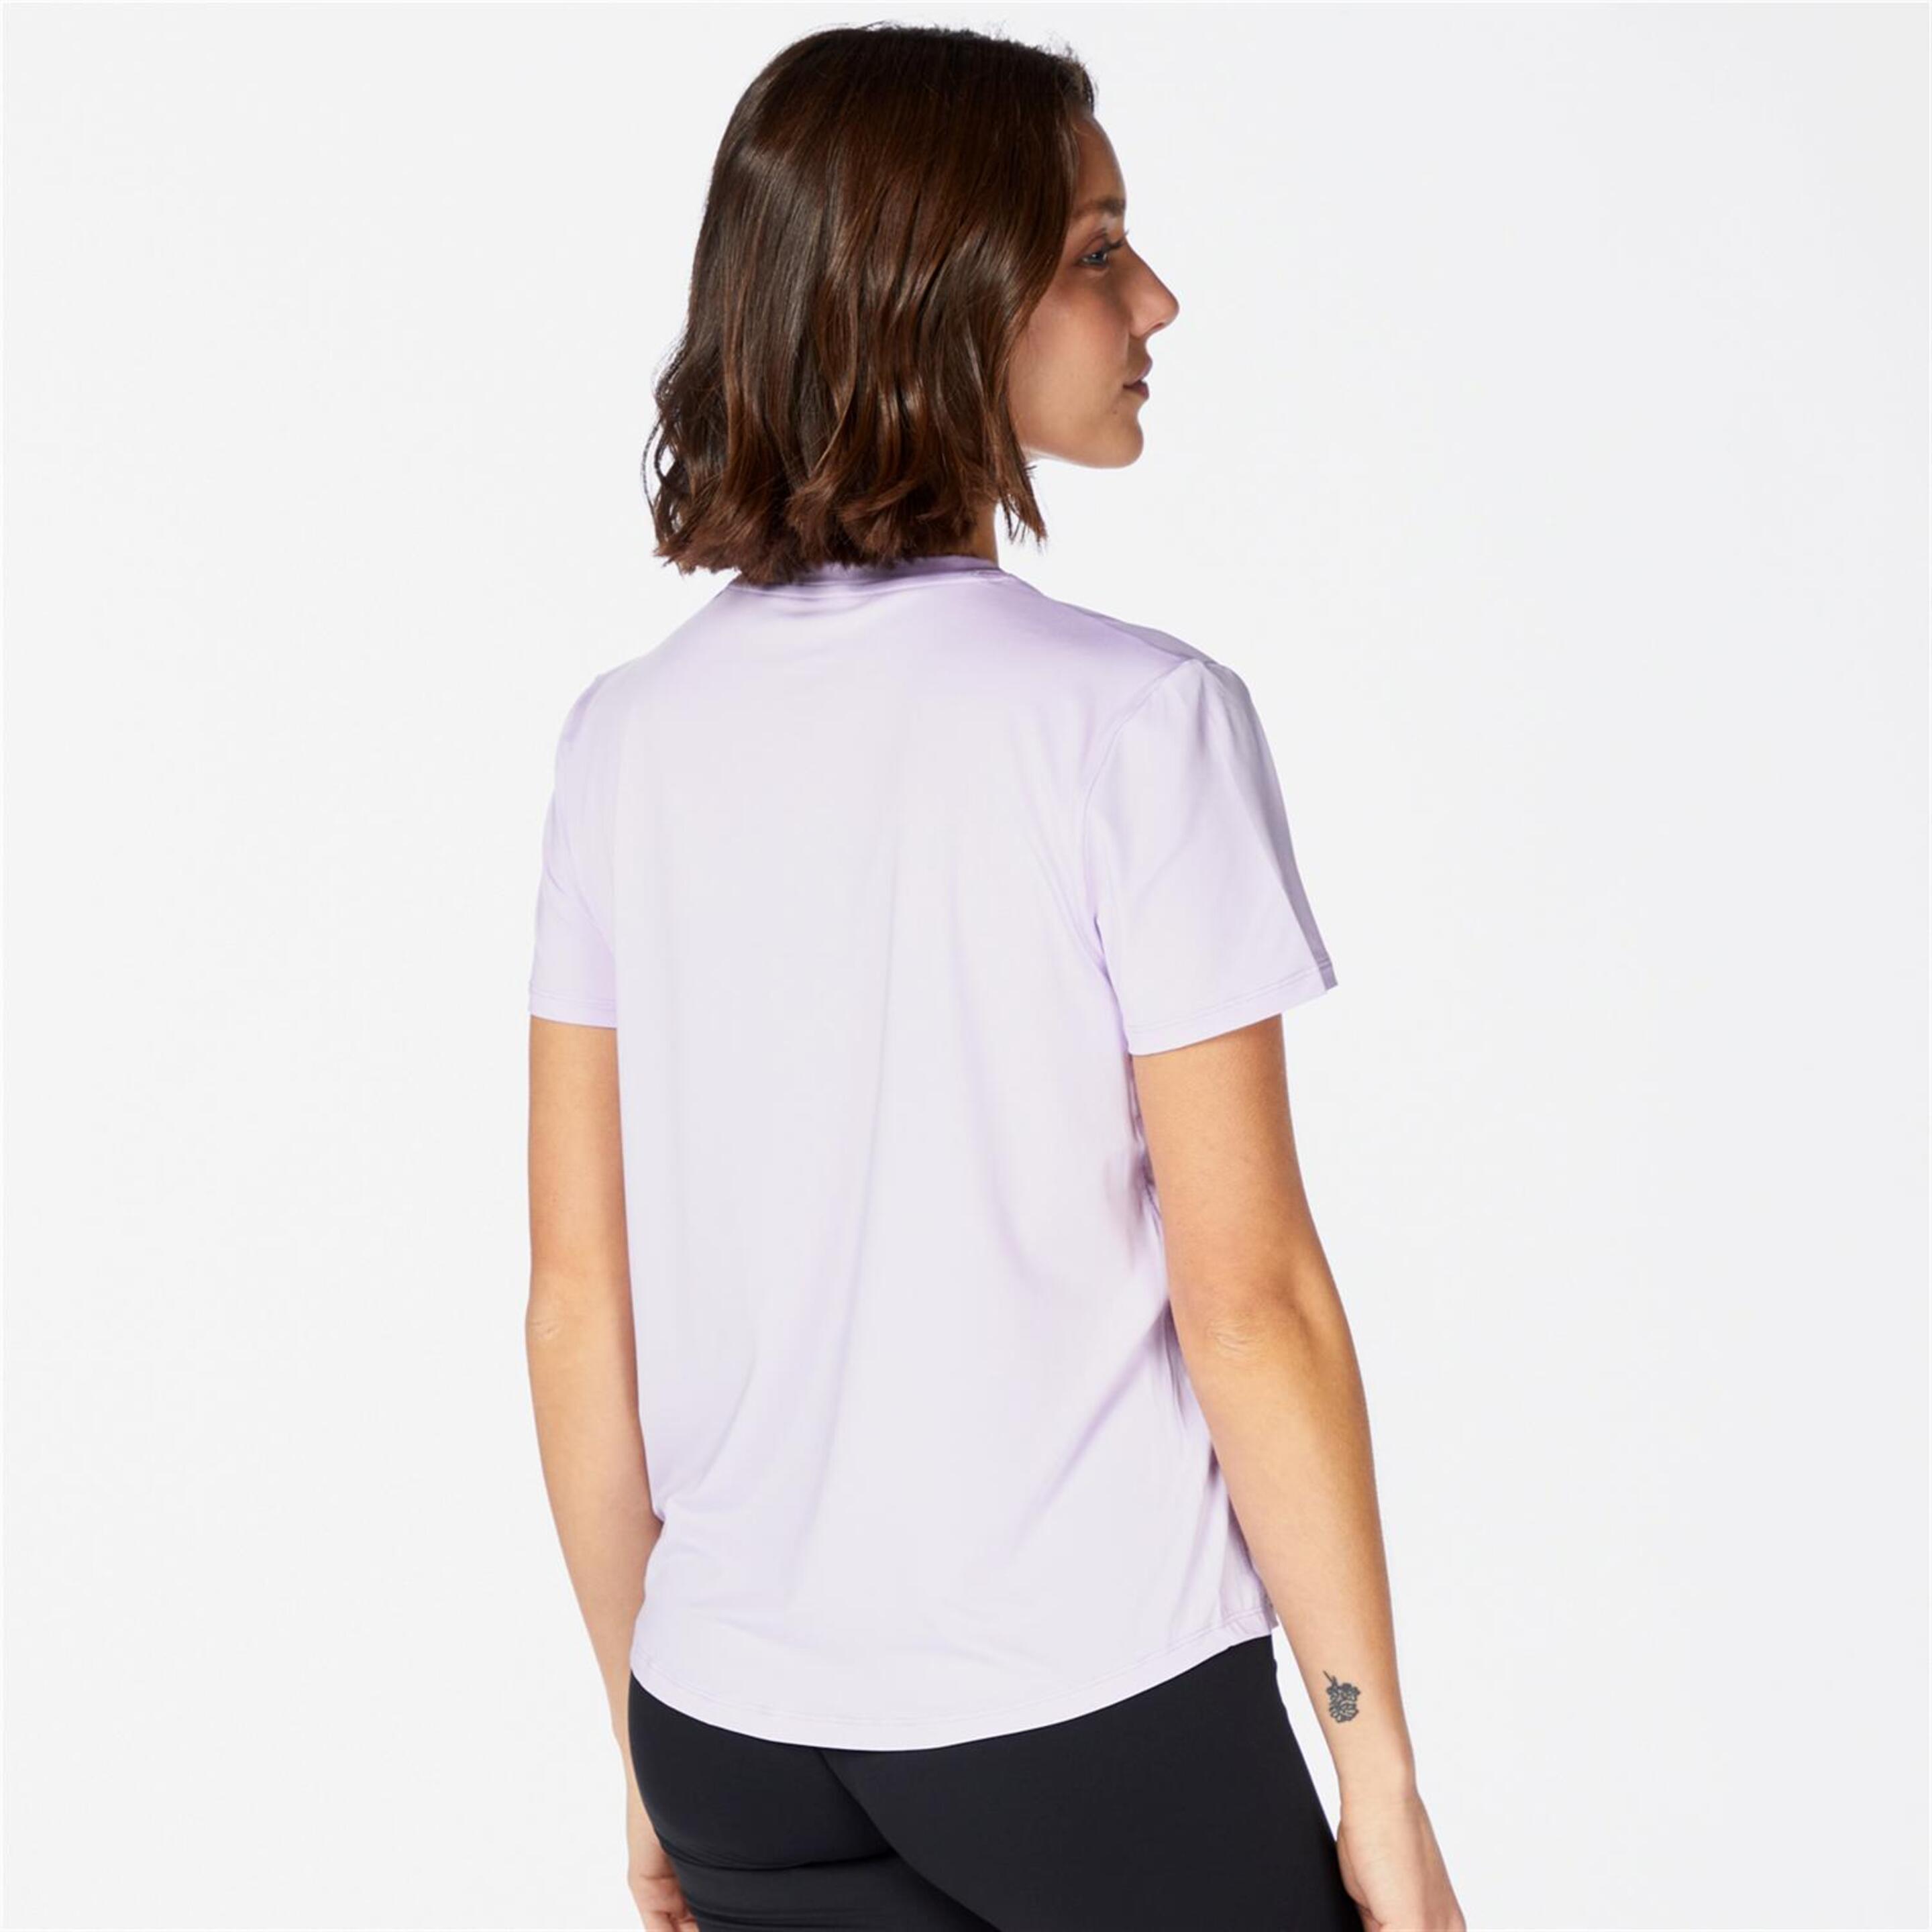 Nike One - Malva - Camiseta Fitness Mujer